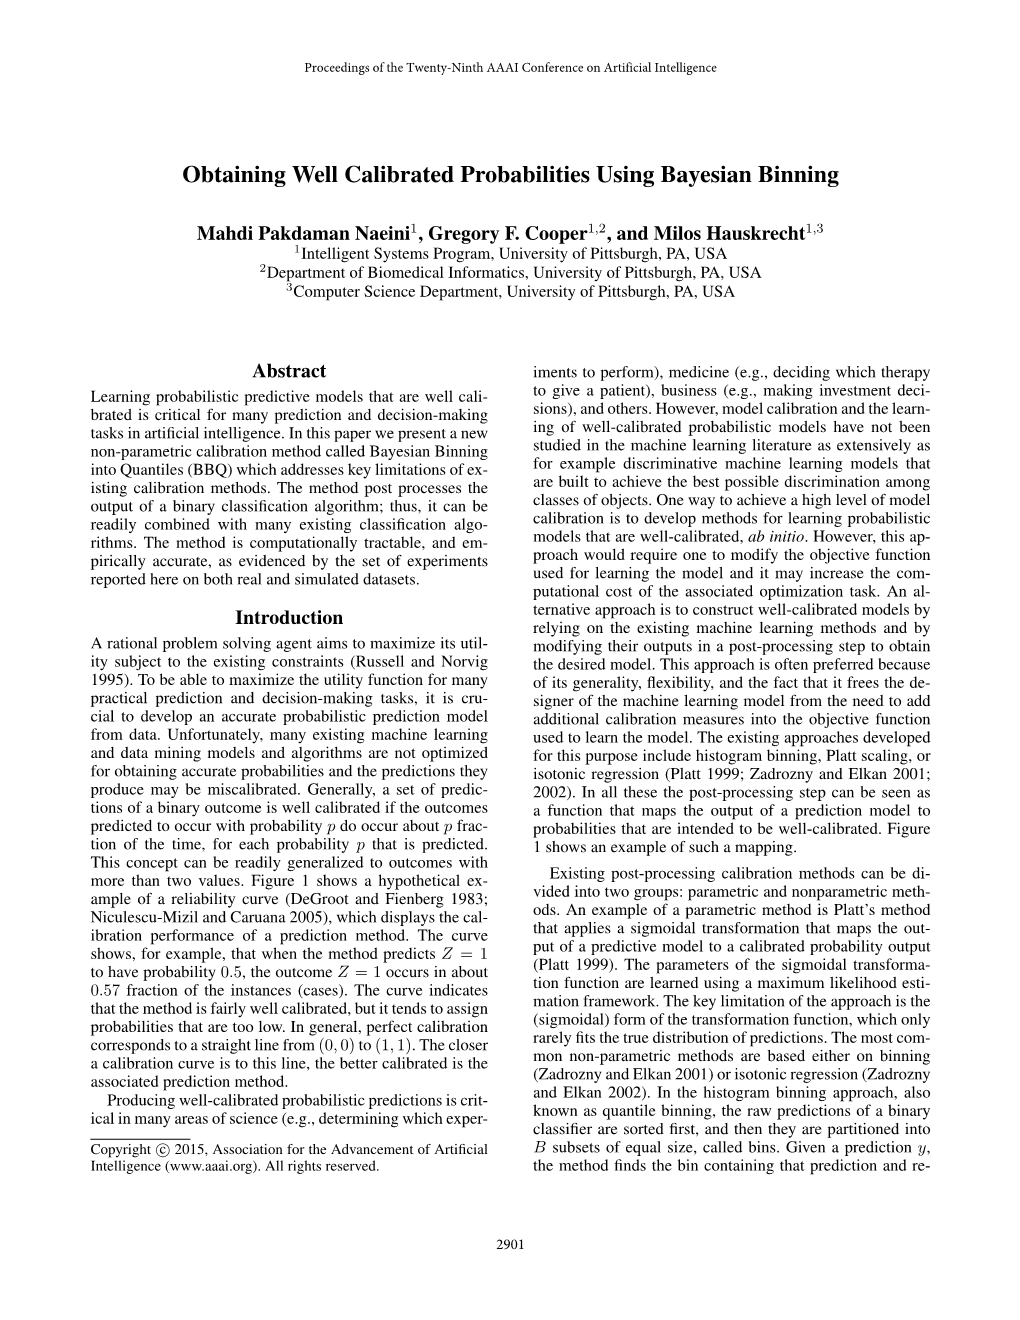 Obtaining Well Calibrated Probabilities Using Bayesian Binning